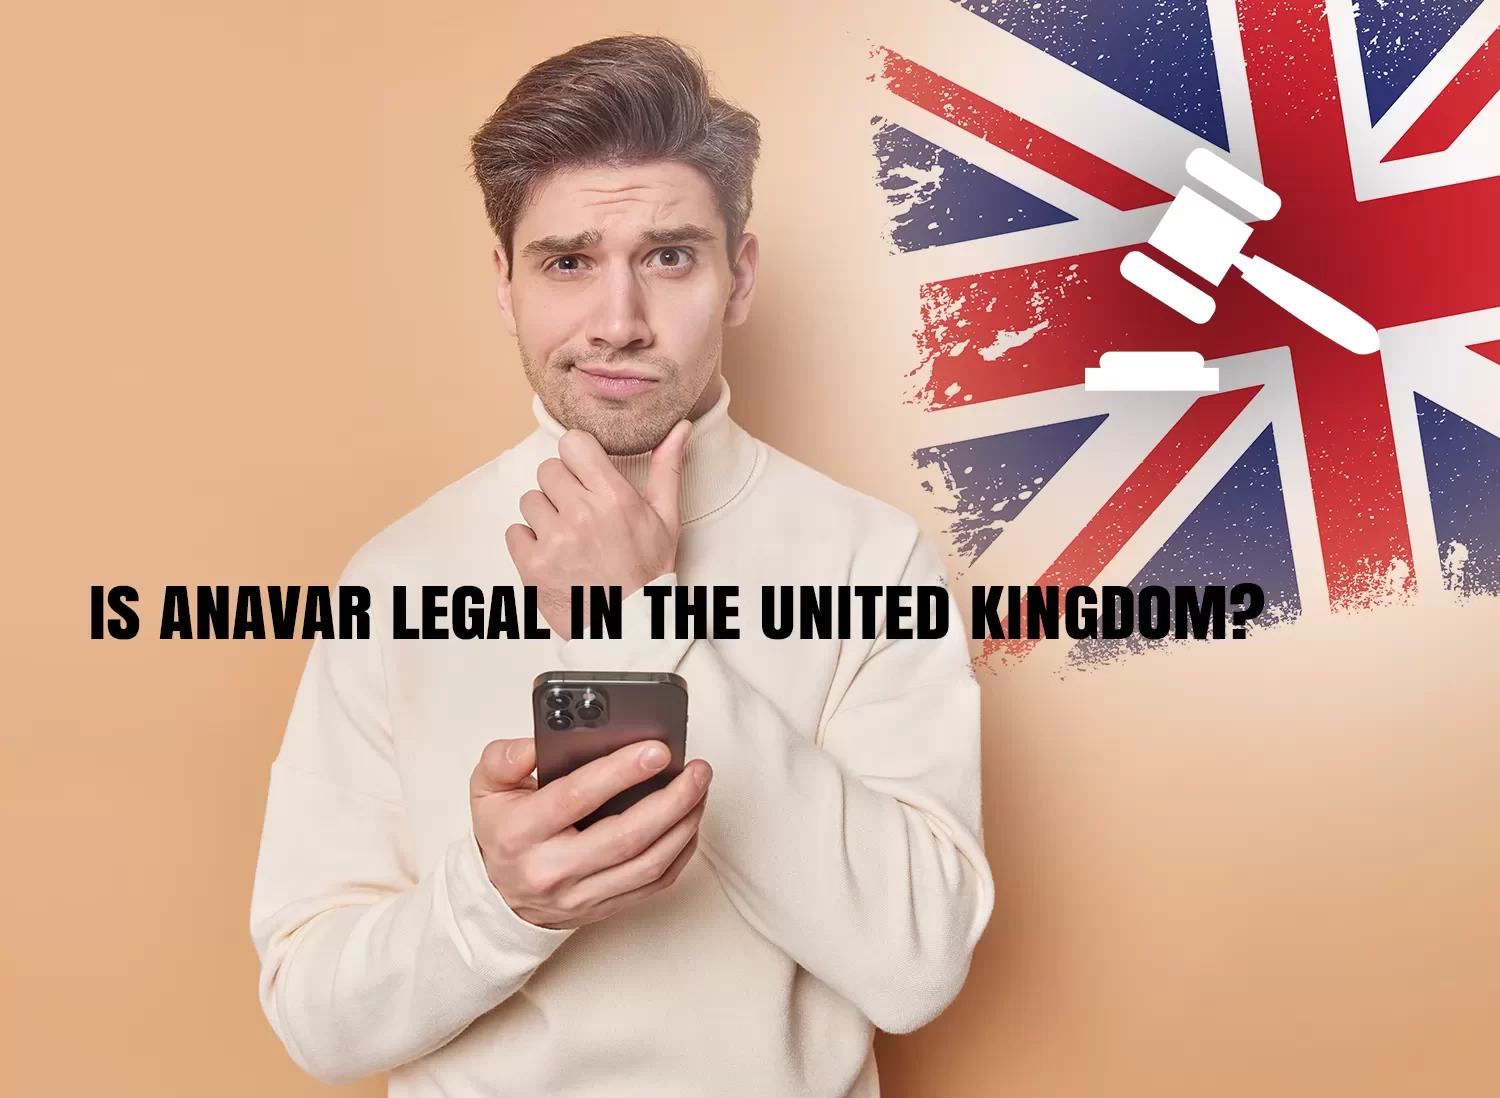 Anavar legality in United Kingdom